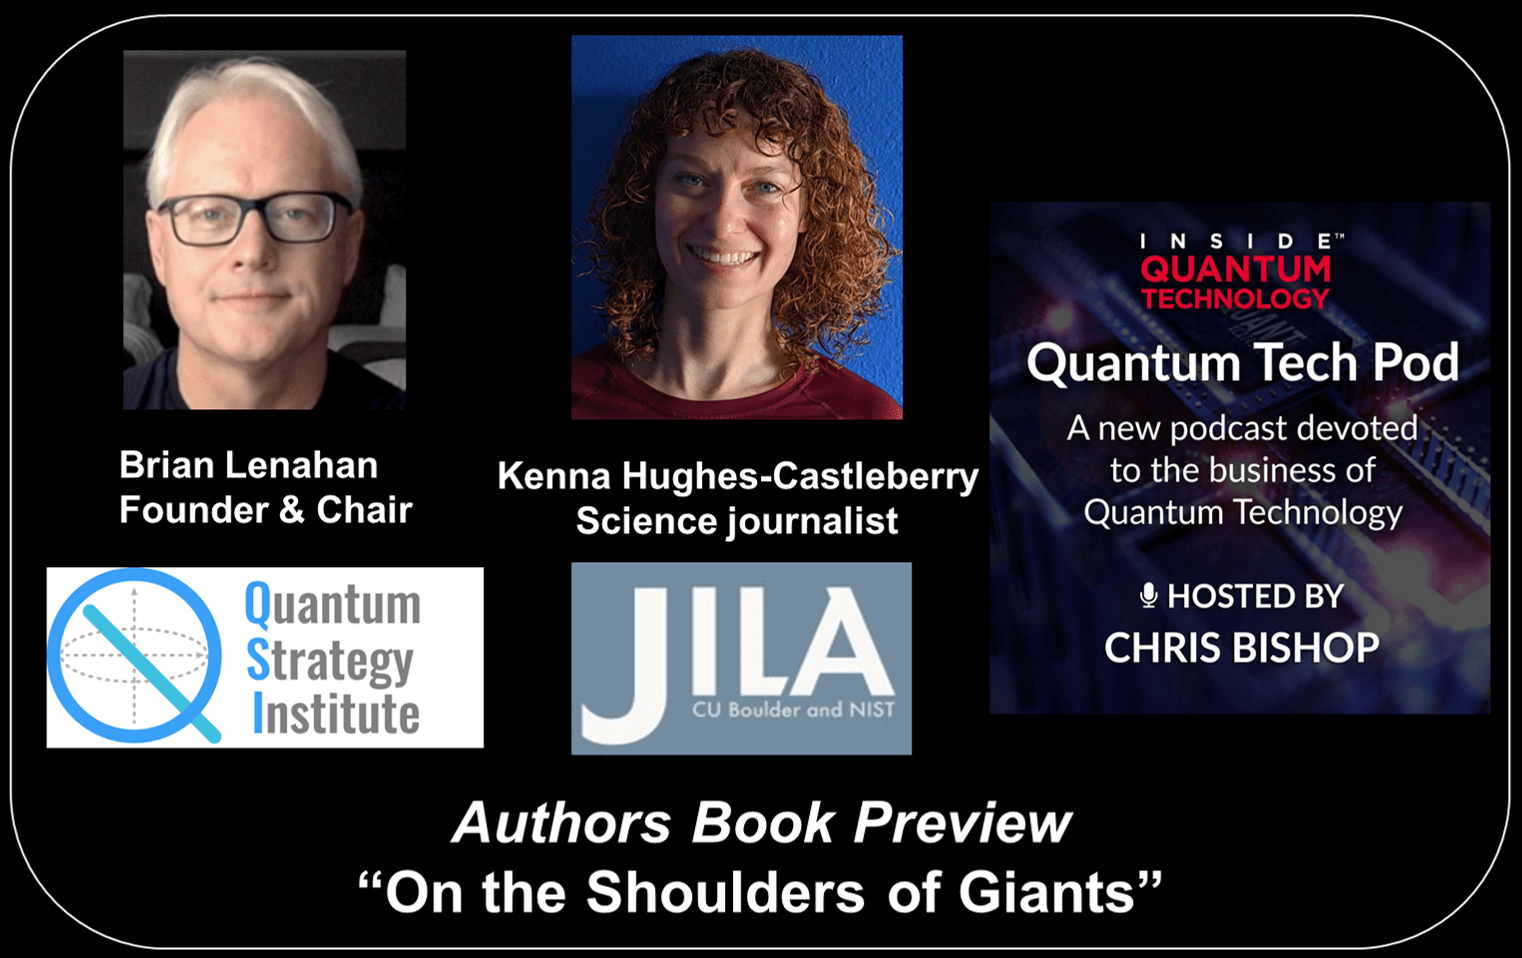 Quantum Tech Pod Episode 47: Брайан Ленахан и Кенна Хьюз-Кастлберри обсуждают свою книгу «На плечах гигантов»